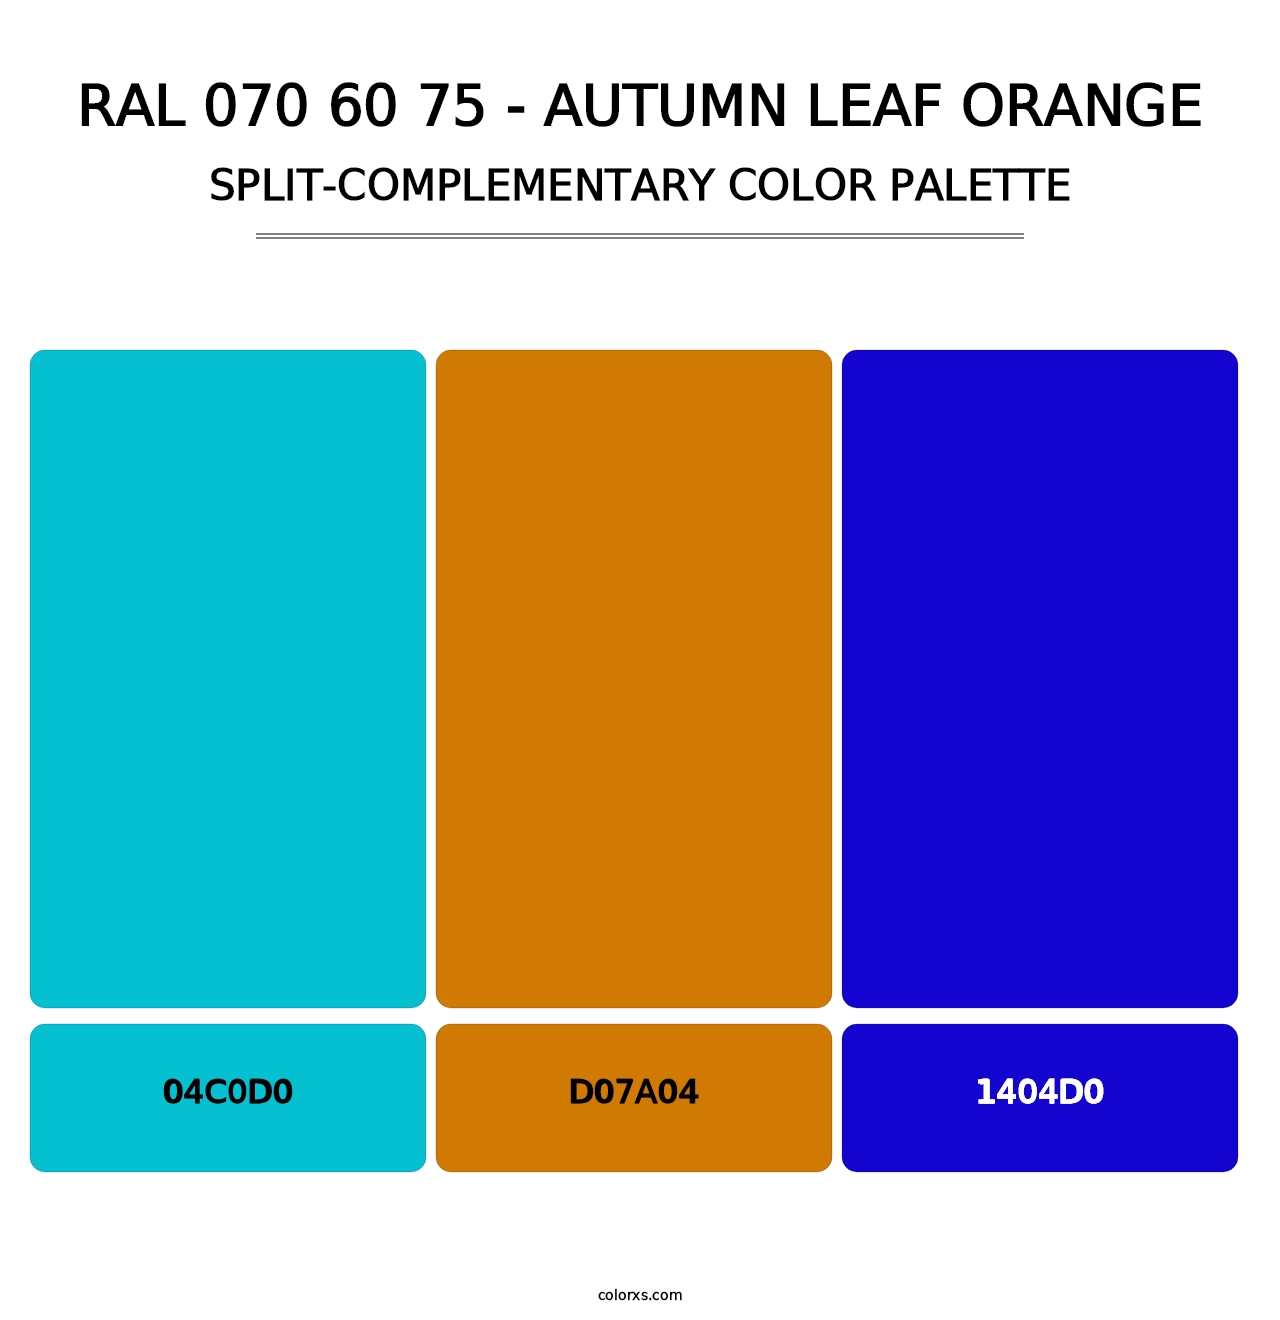 RAL 070 60 75 - Autumn Leaf Orange - Split-Complementary Color Palette